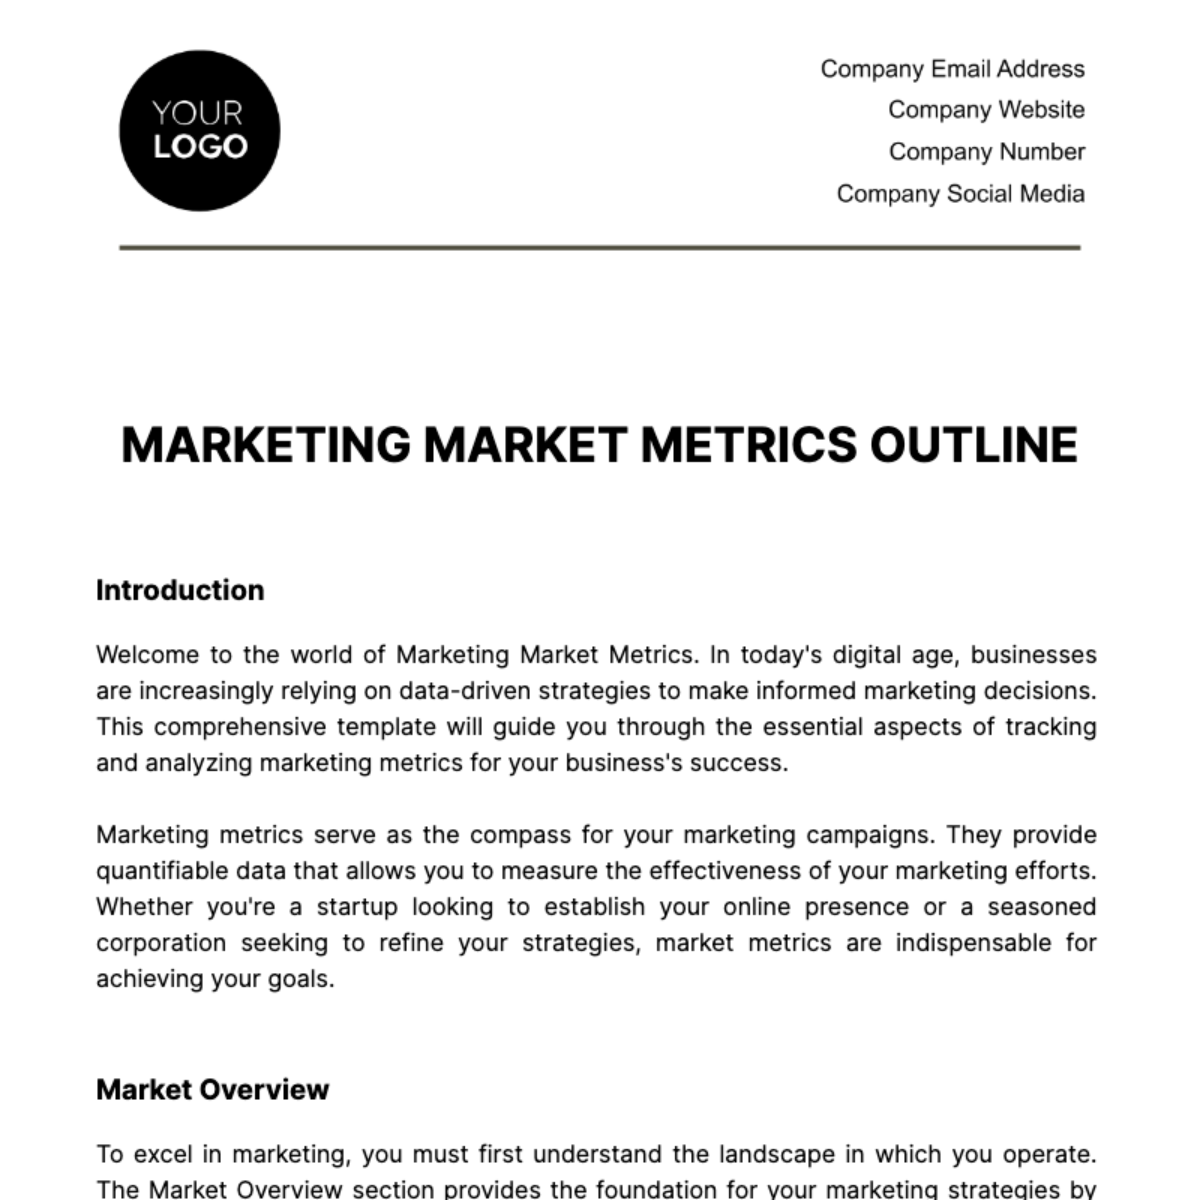 Marketing Market Metrics Outline Template